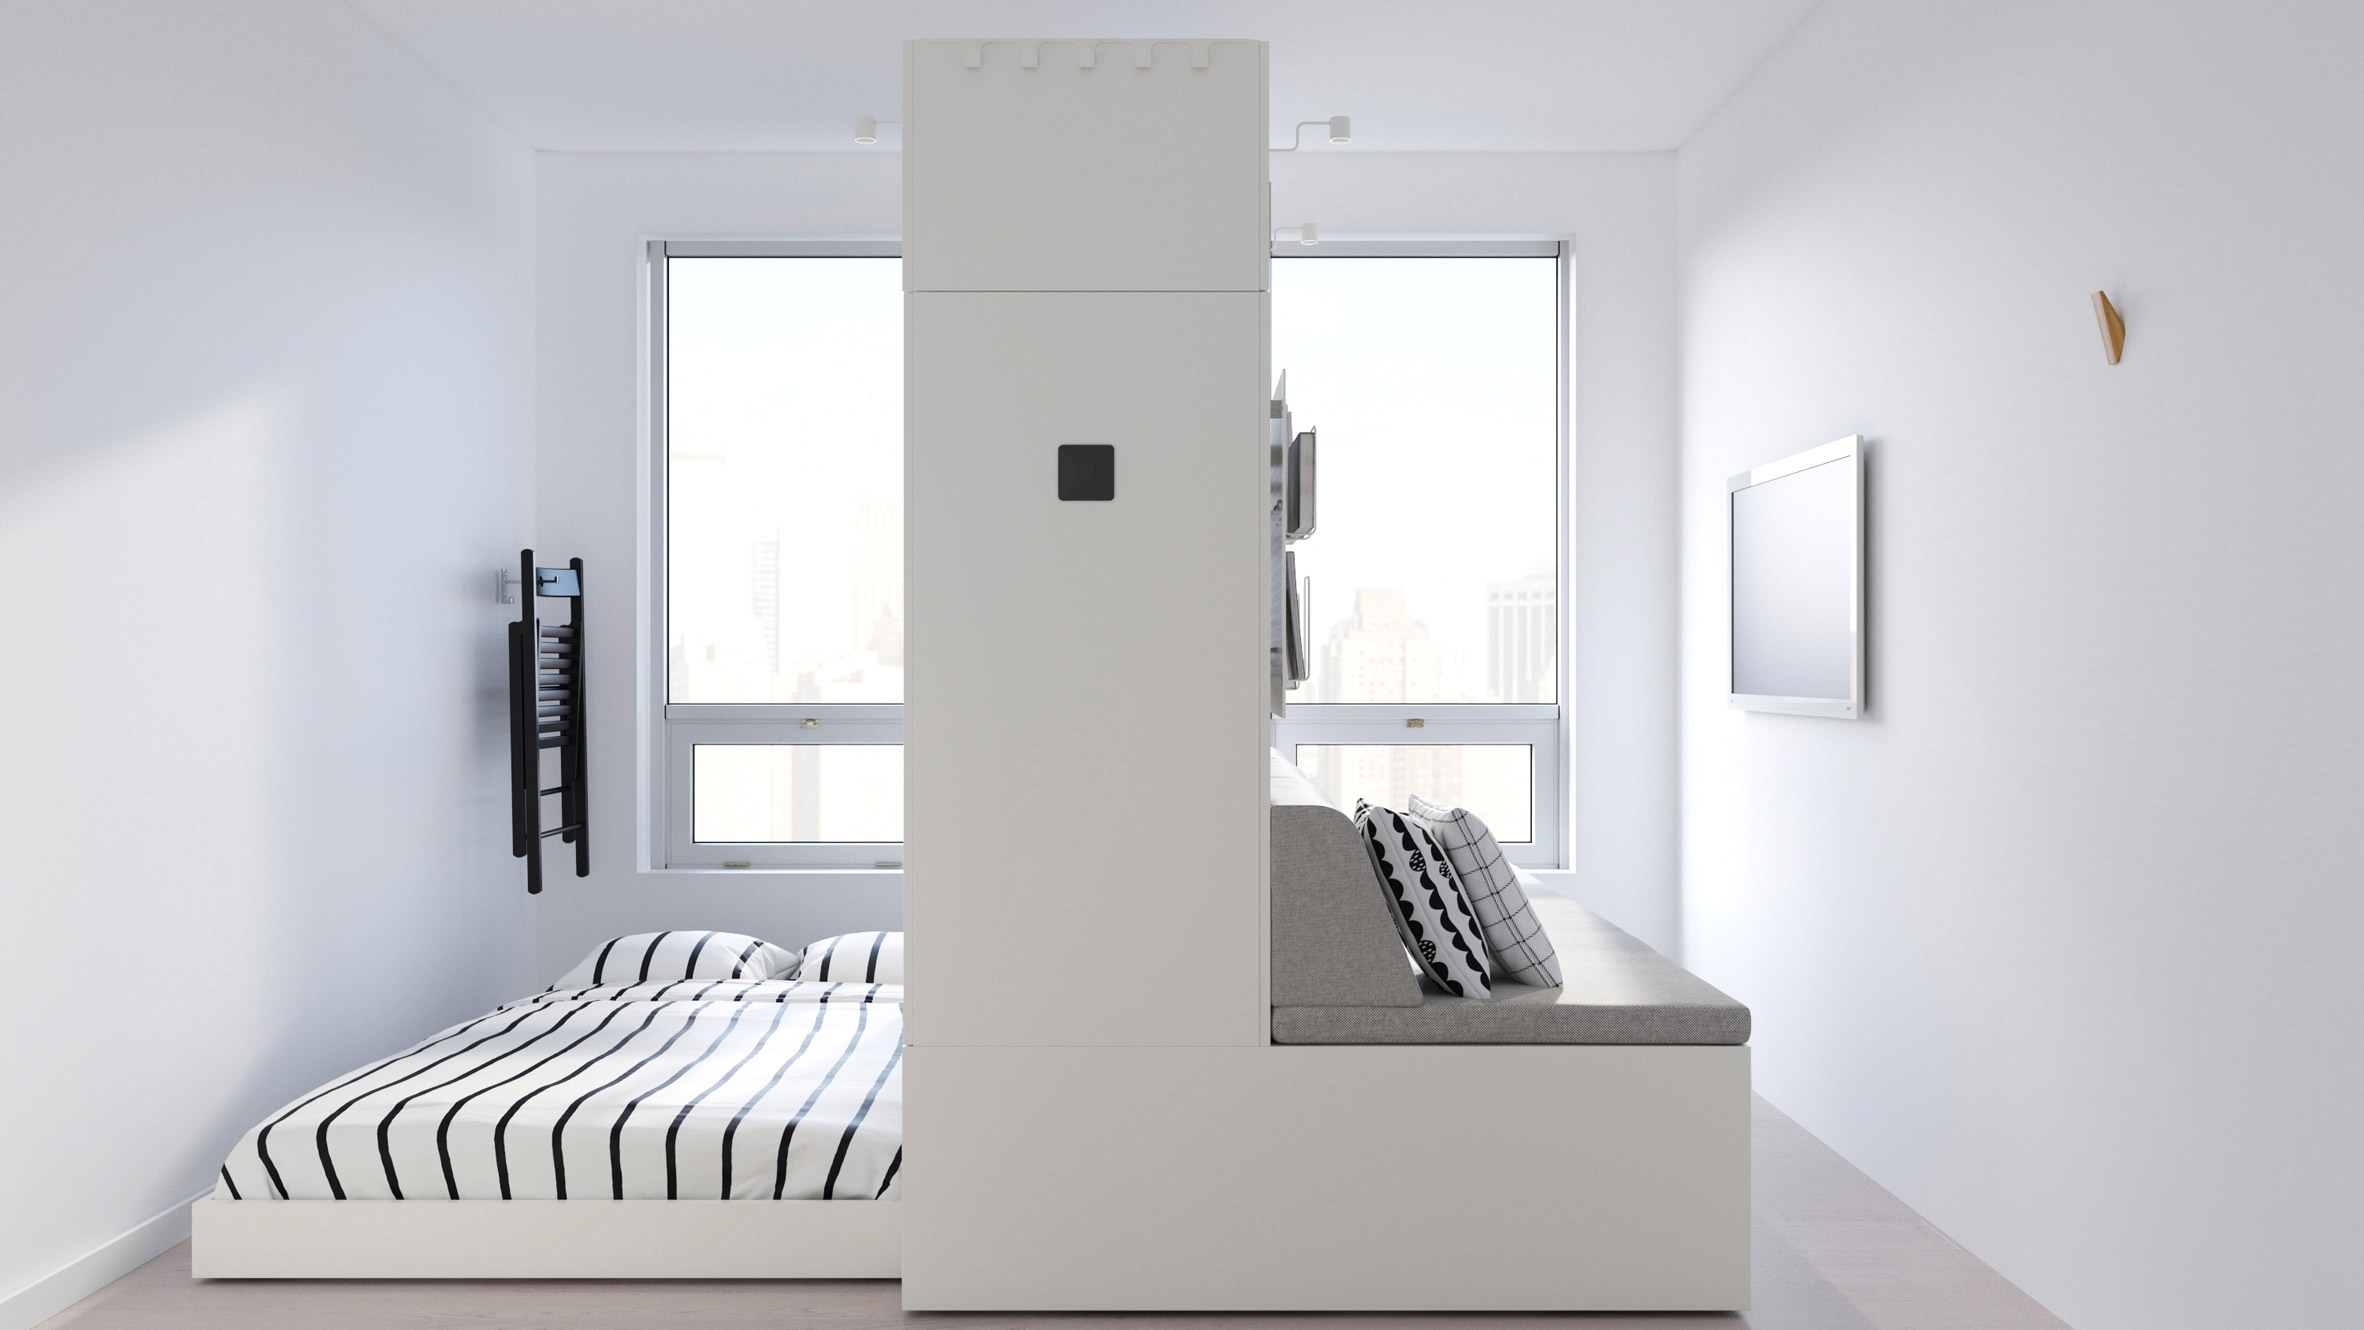 Ikea And Ori Collaborate On Robotic Rognan Furniture For Small